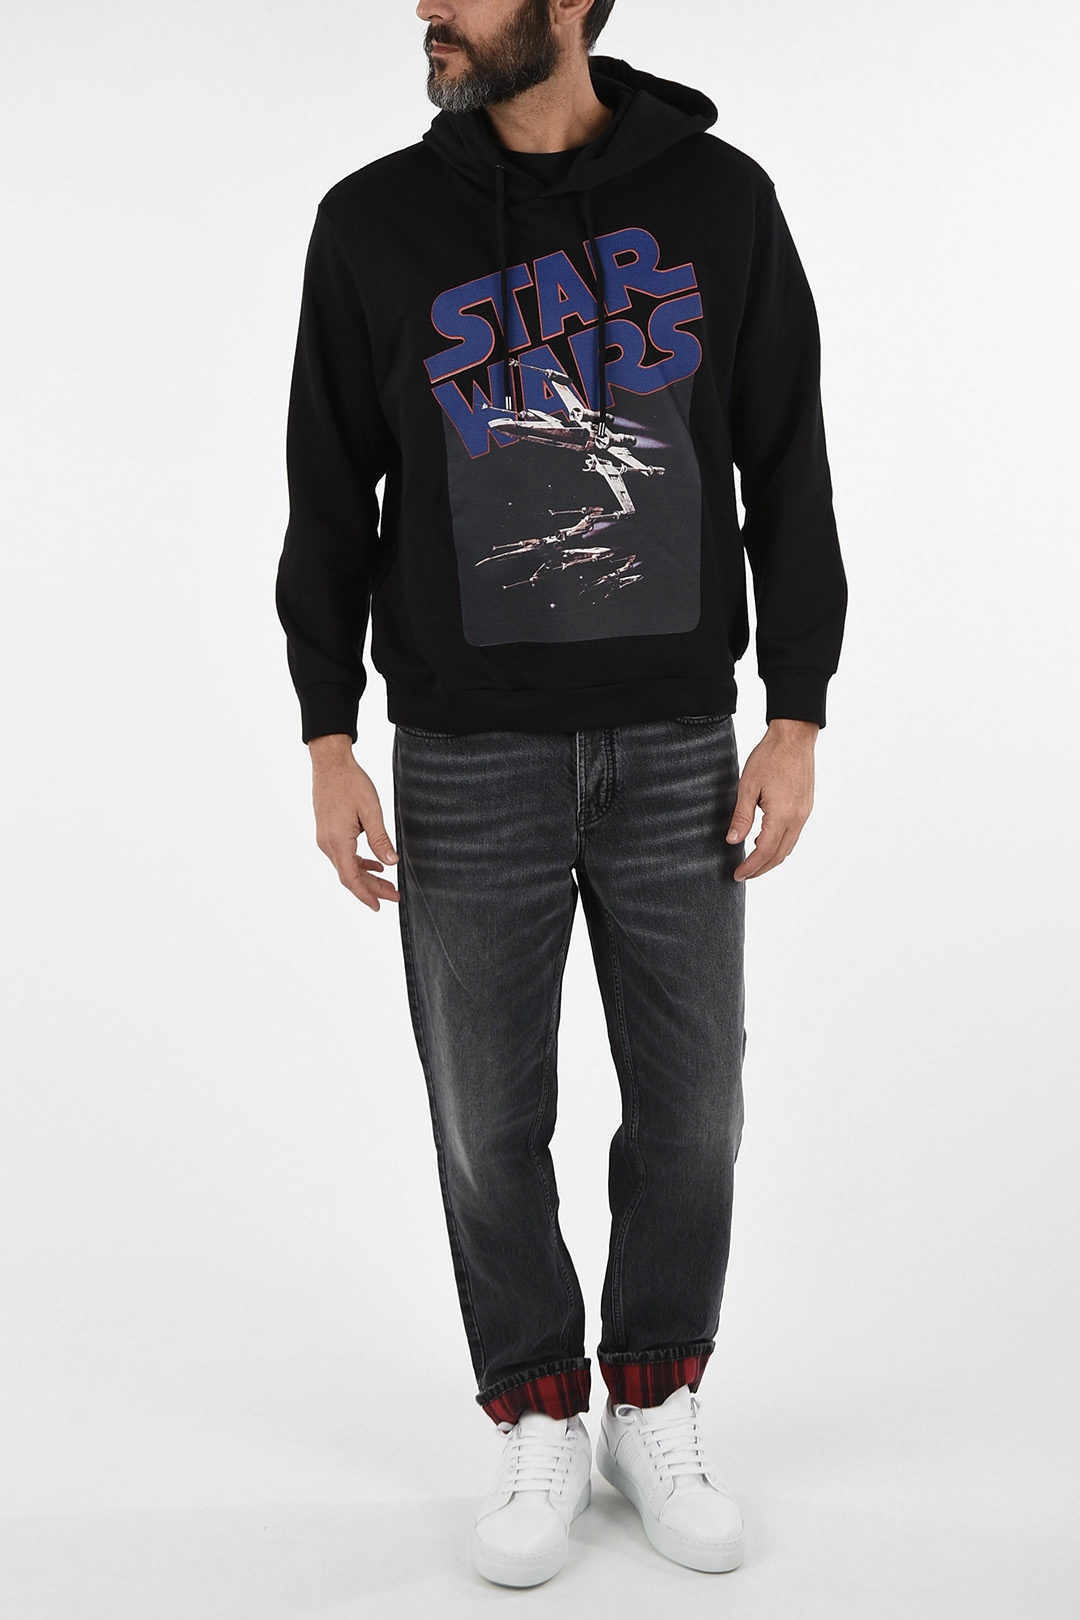 Visiter la boutique Star WarsStar Wars X Wing Next Time Lets Carpool Men's Sweatshirt 